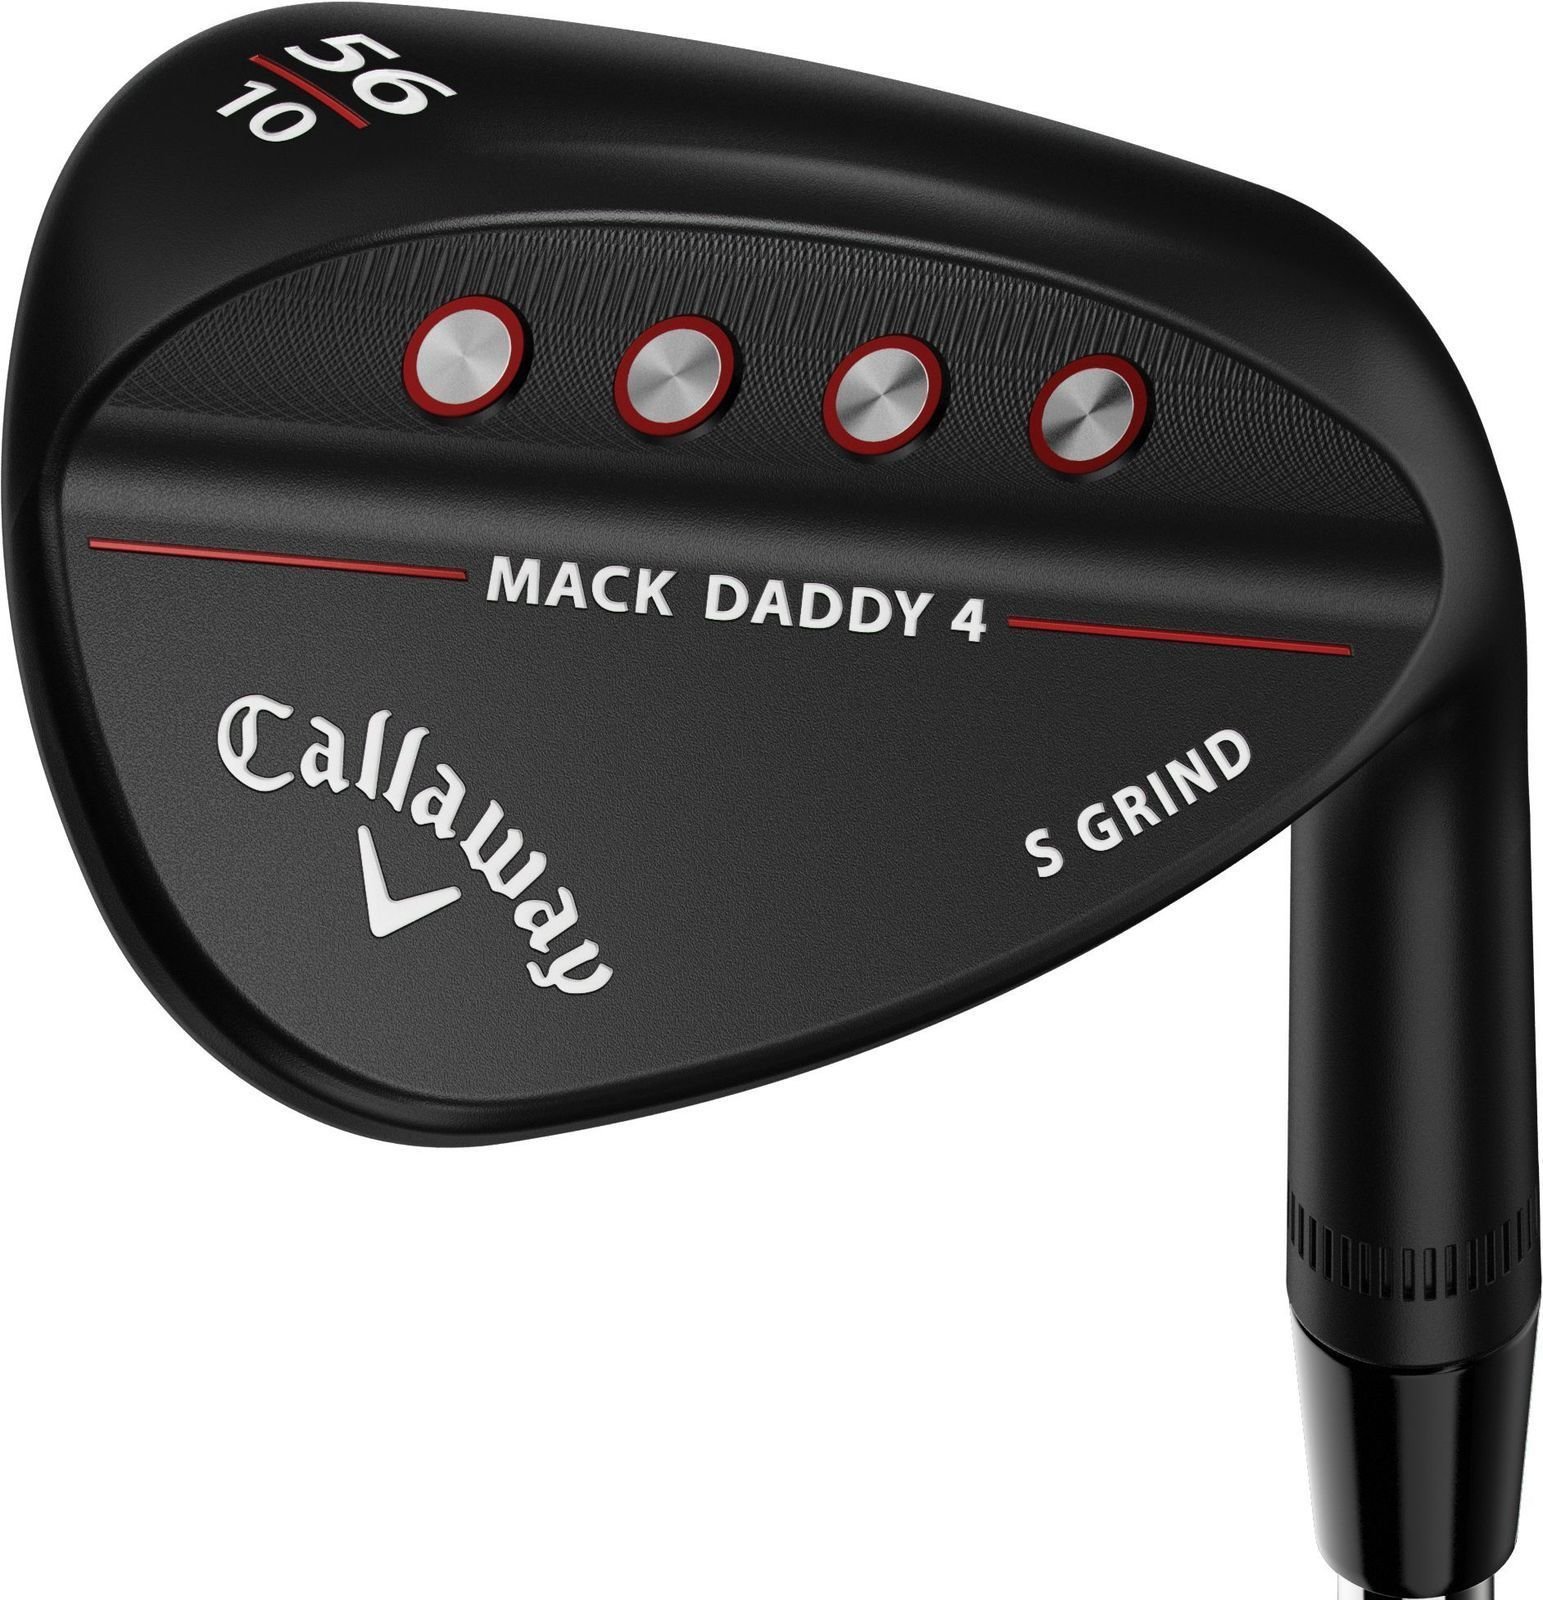 Palica za golf - wedger Callaway Mack Daddy 4 Black Wedge 56-10 S-Grind Right Hand